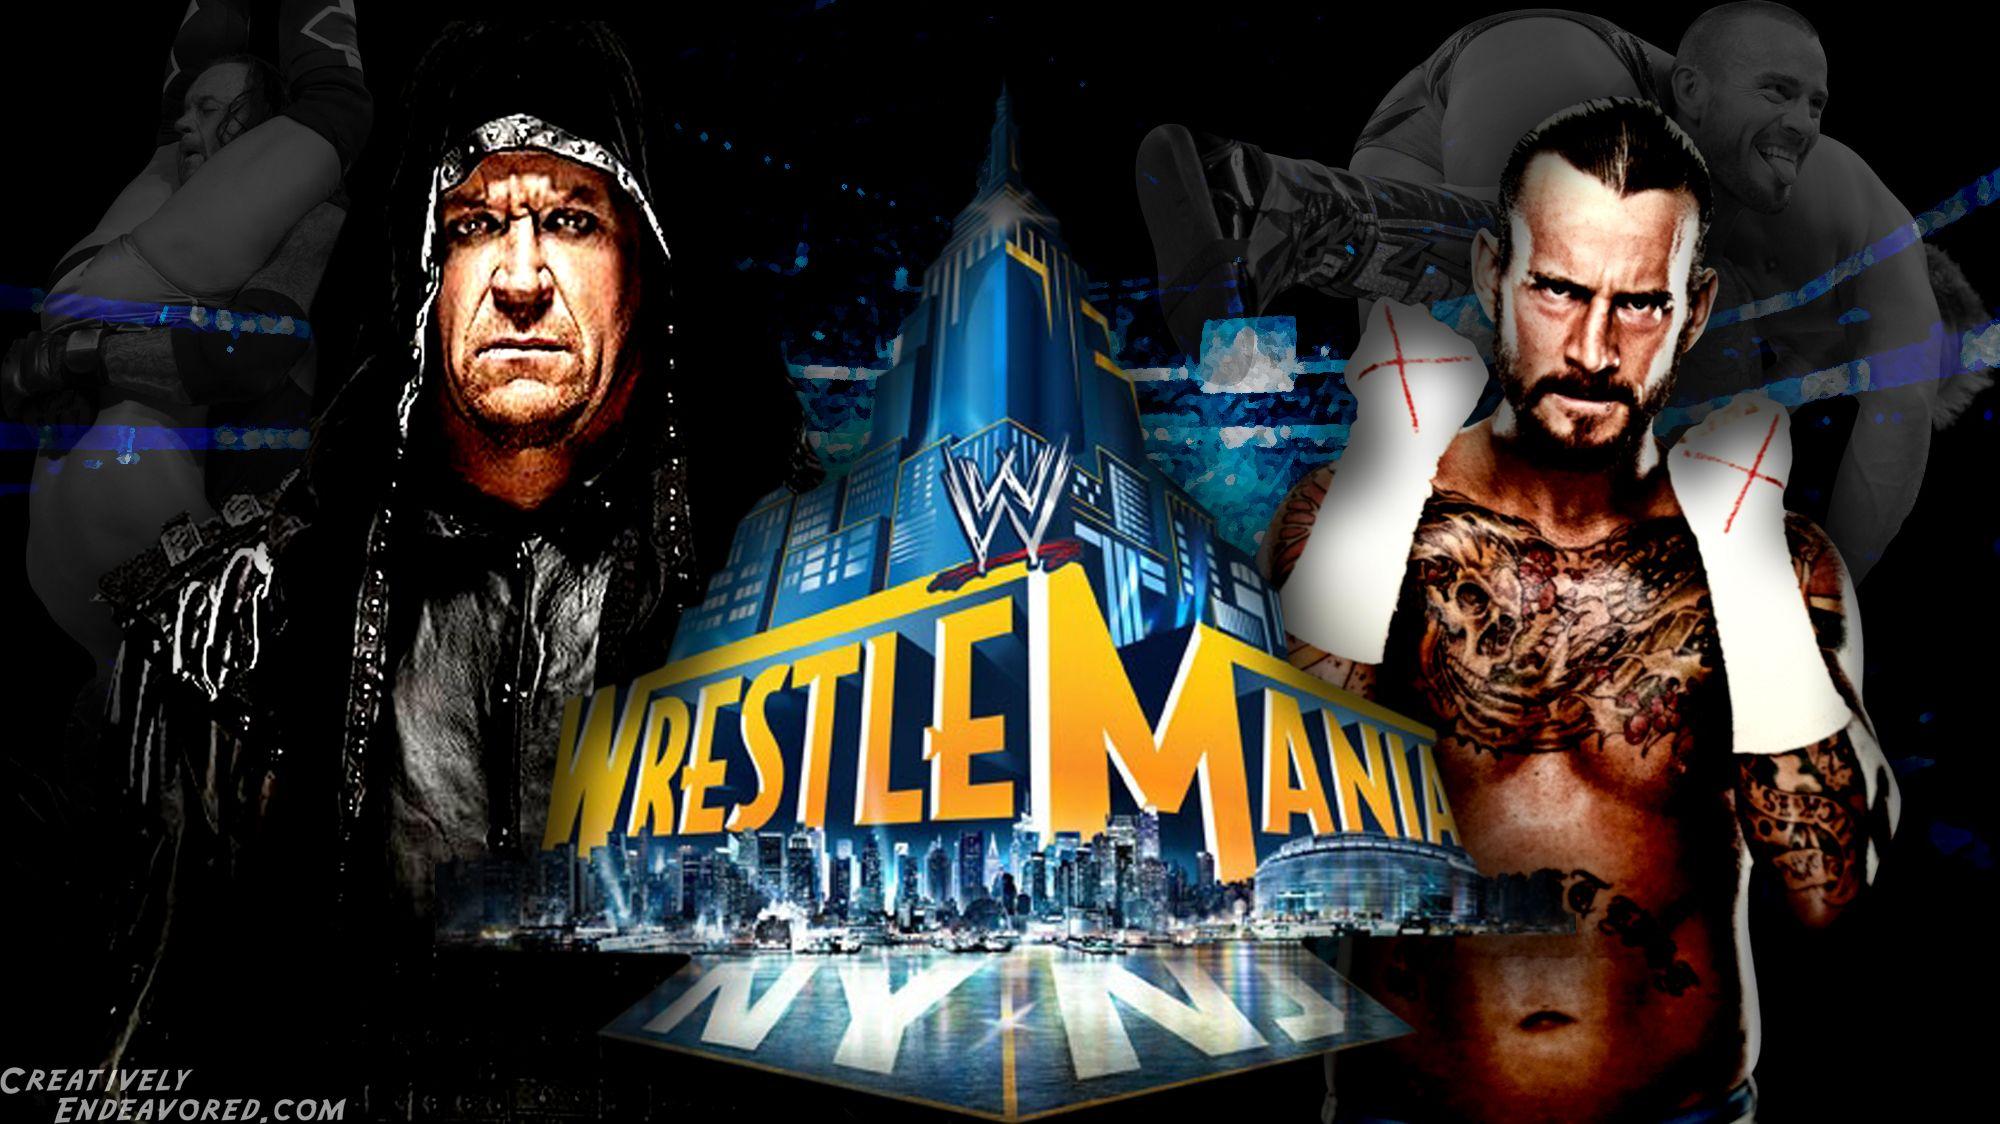 WrestleMania Wallpaper Wednesday: The Undertaker vs CM Punk